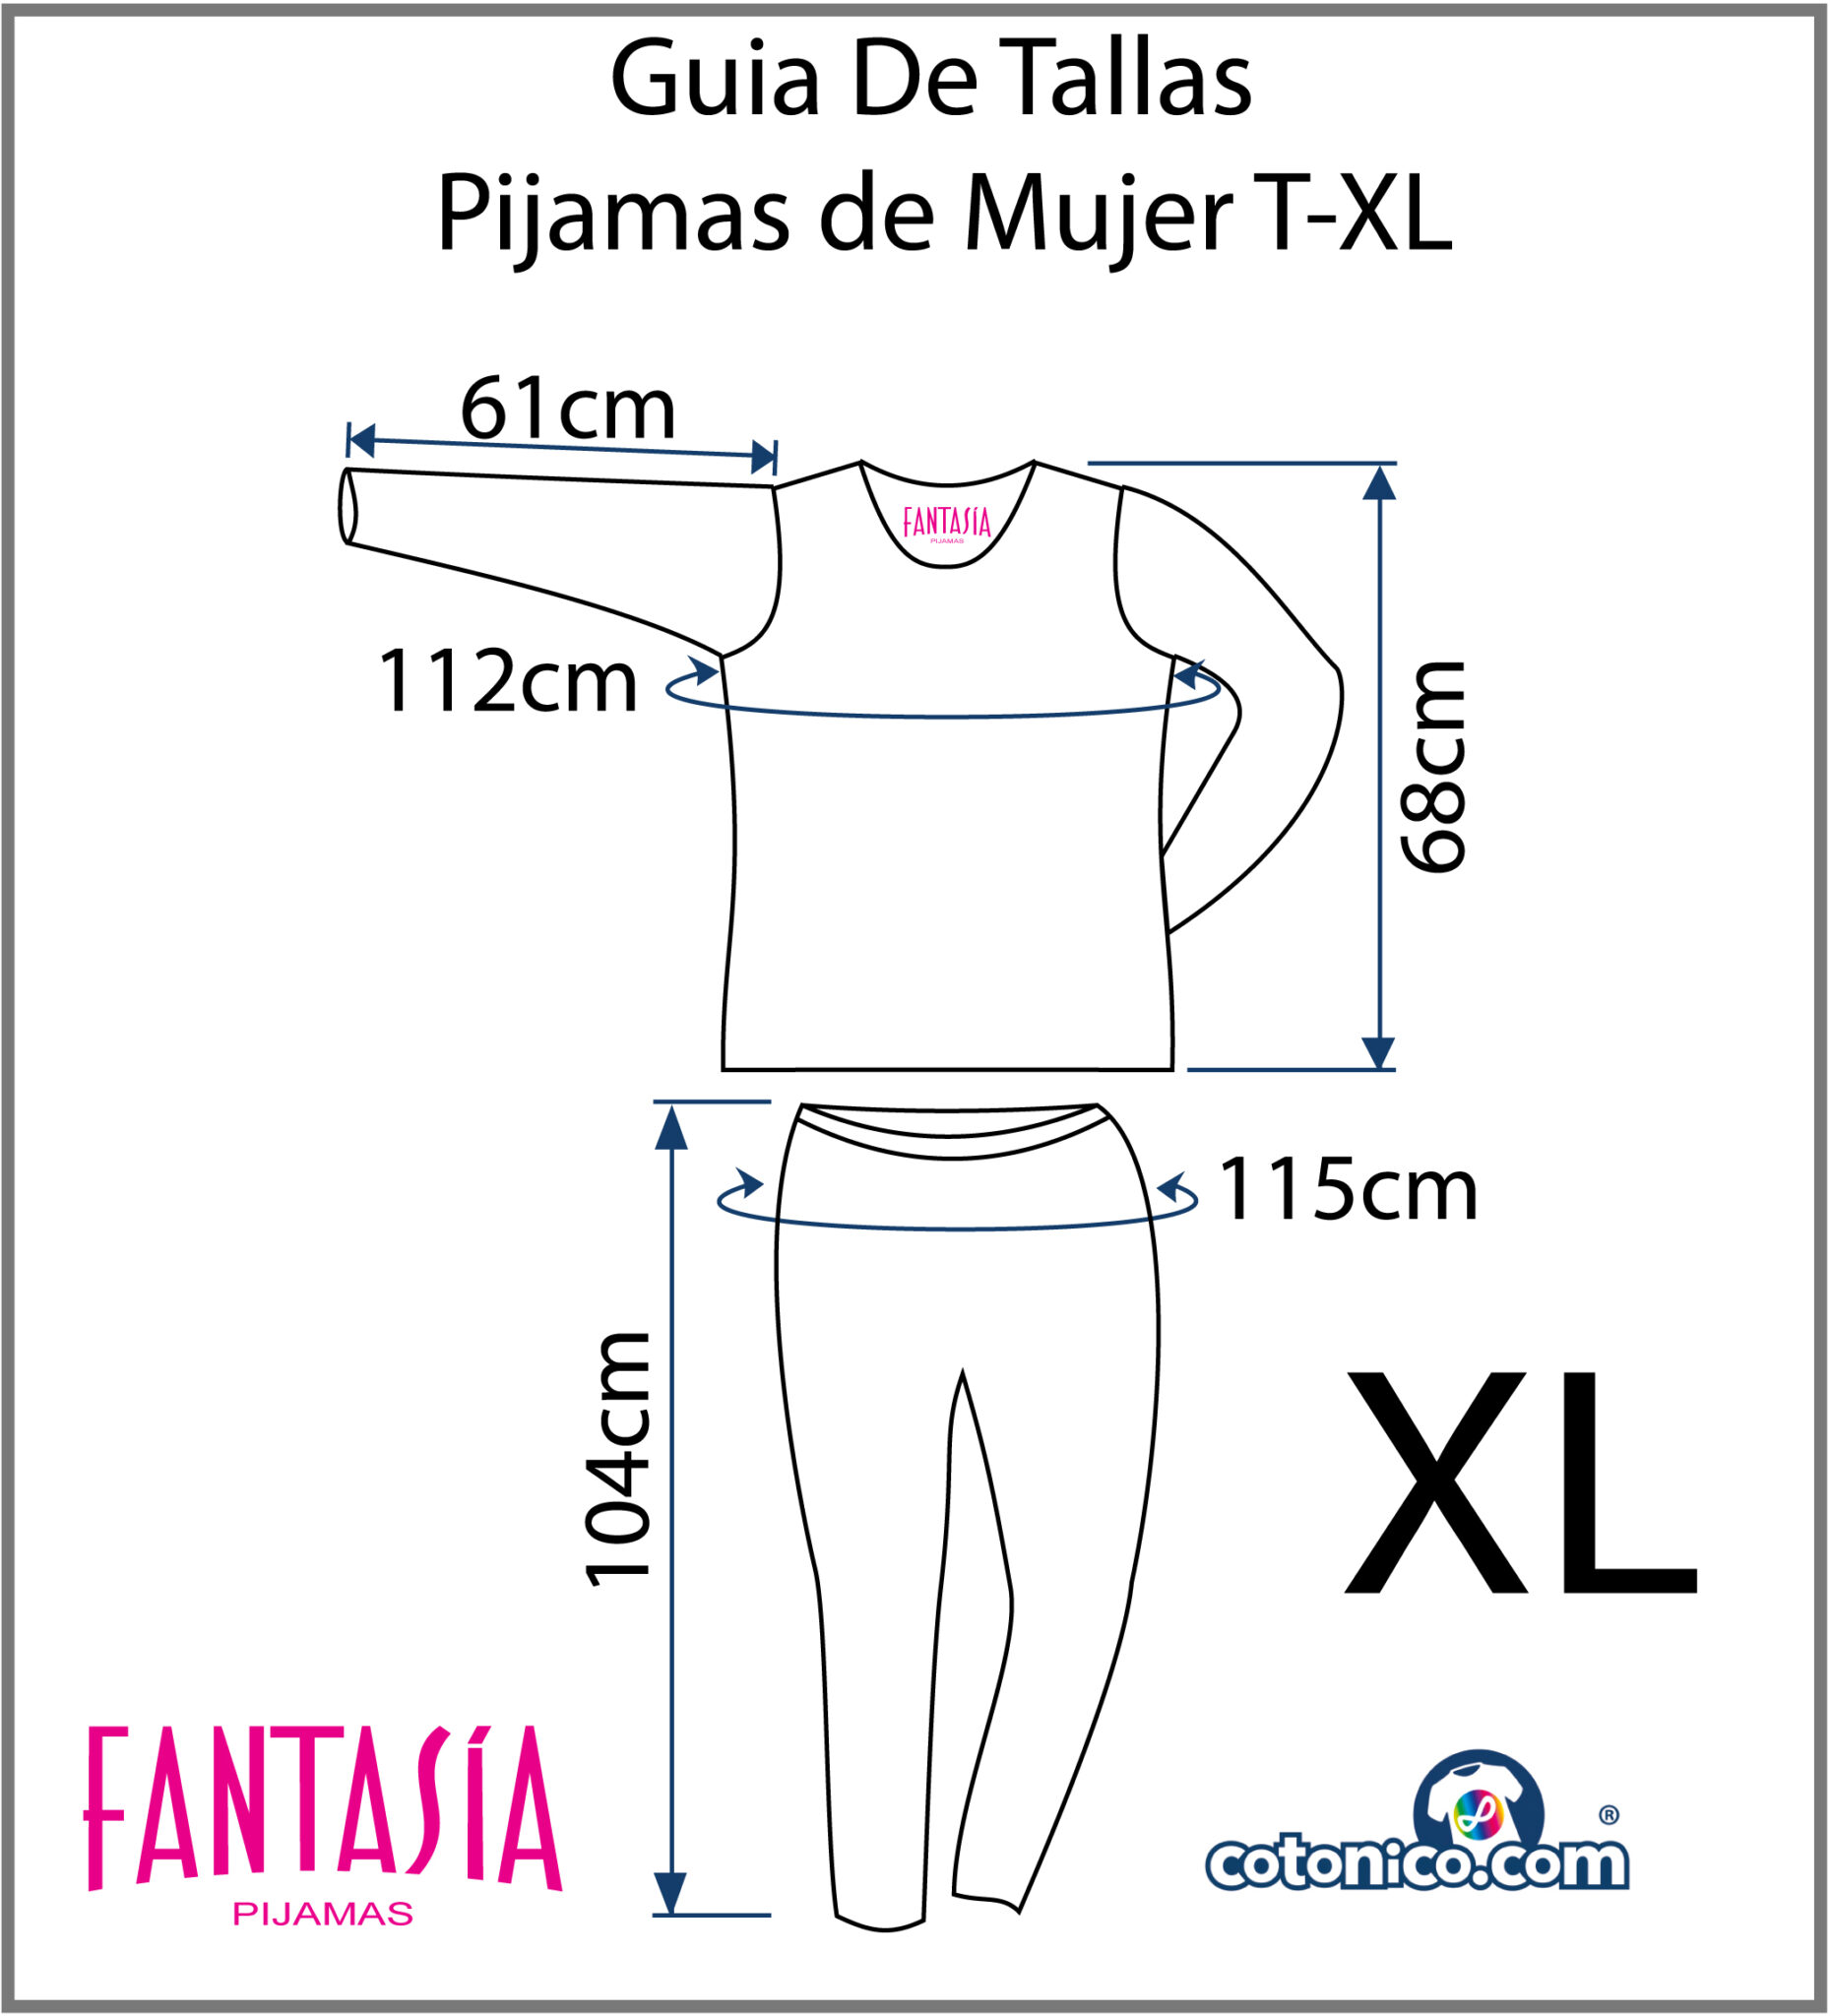 Guia-De-Tallas-Pijamas-De-Mujer-XL